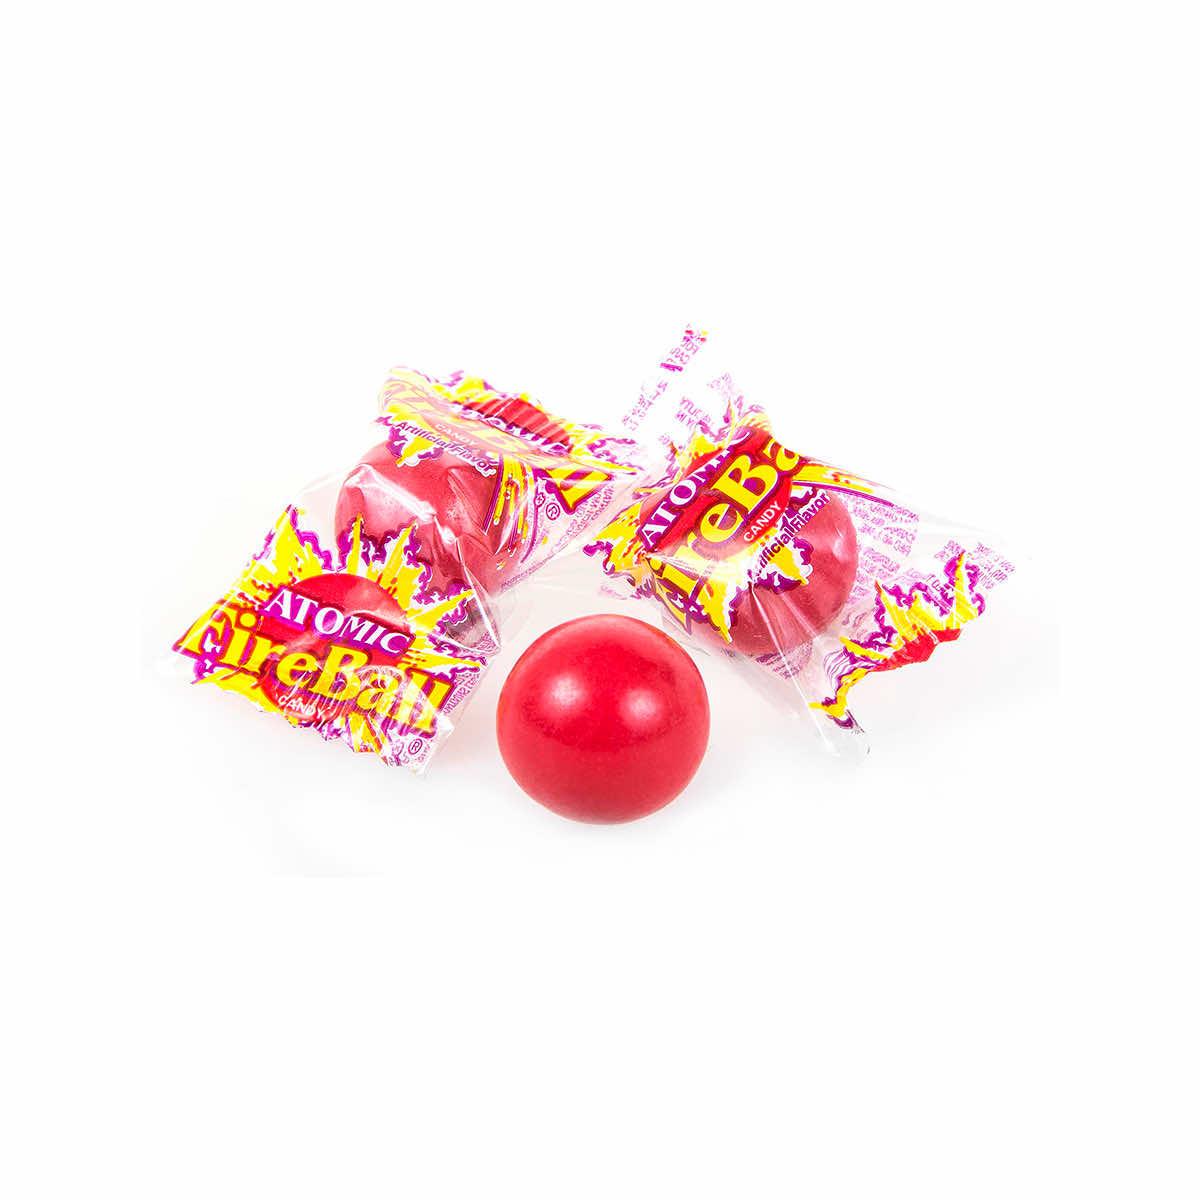  Atomic Fireball Candy - 1 Lb.